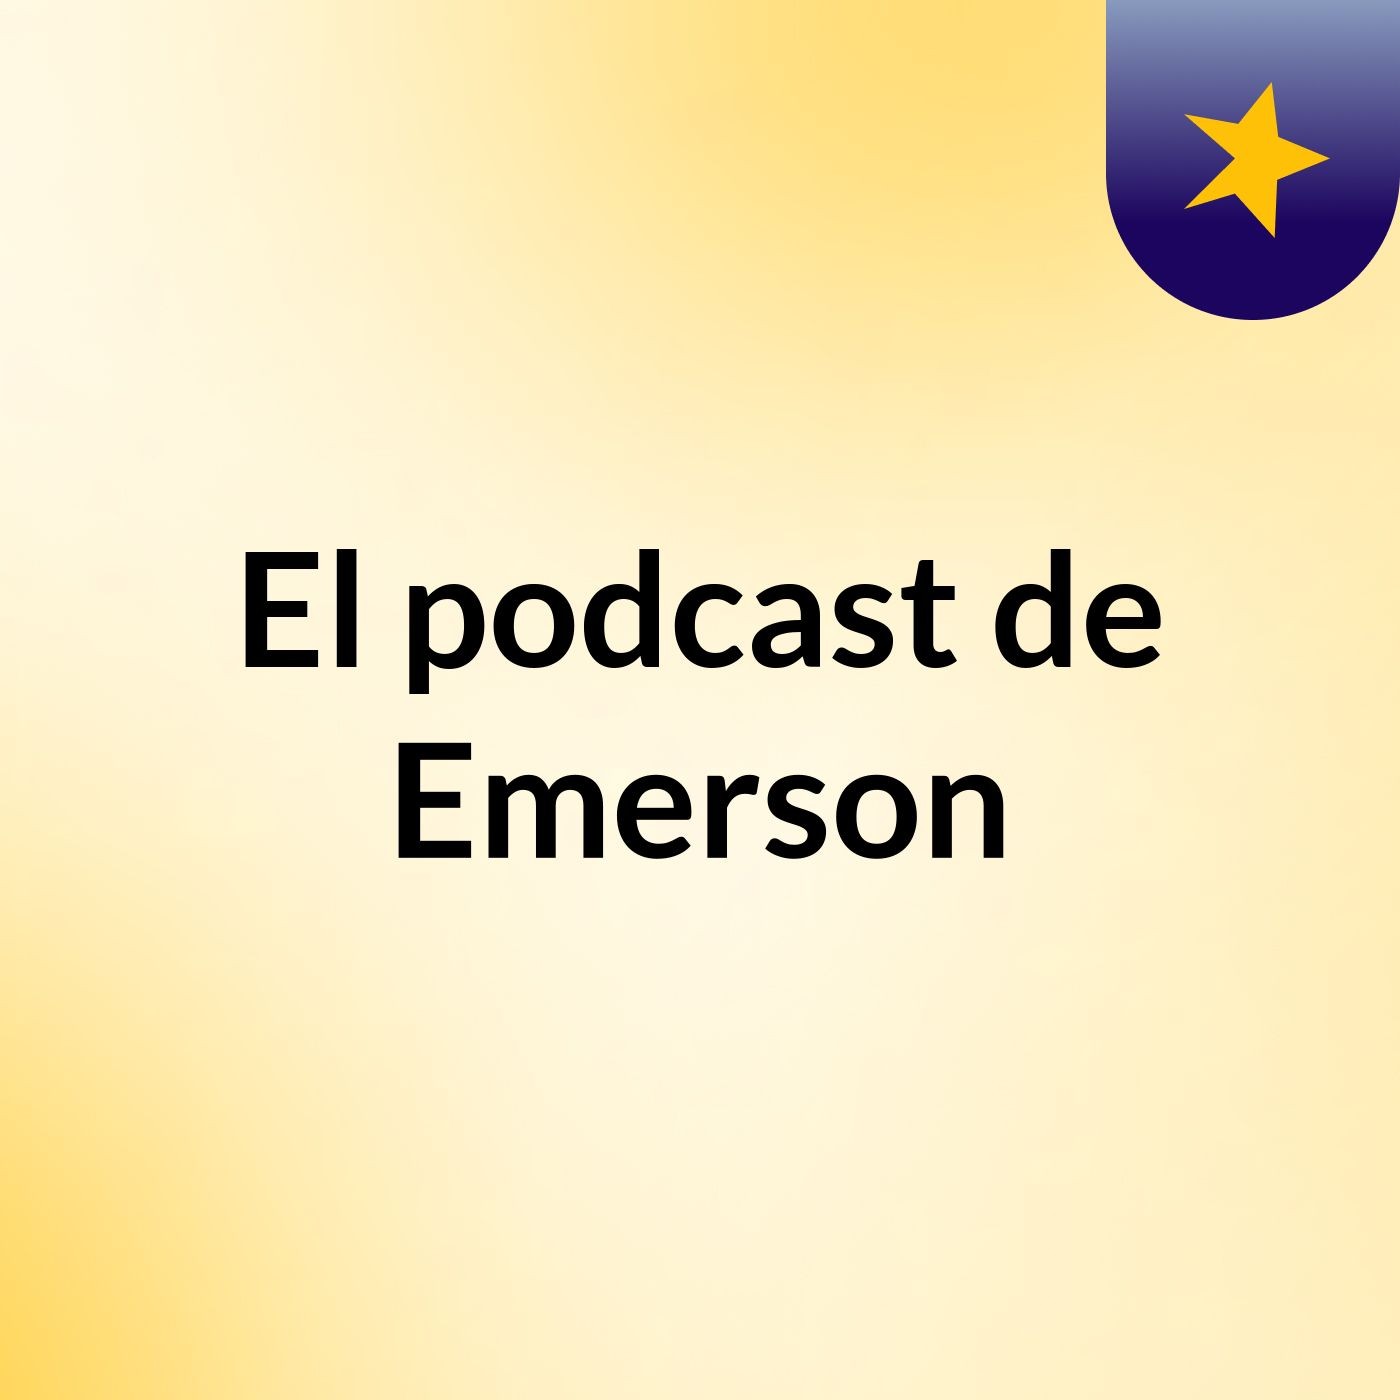 Episodio 2 - El podcast de Emerson